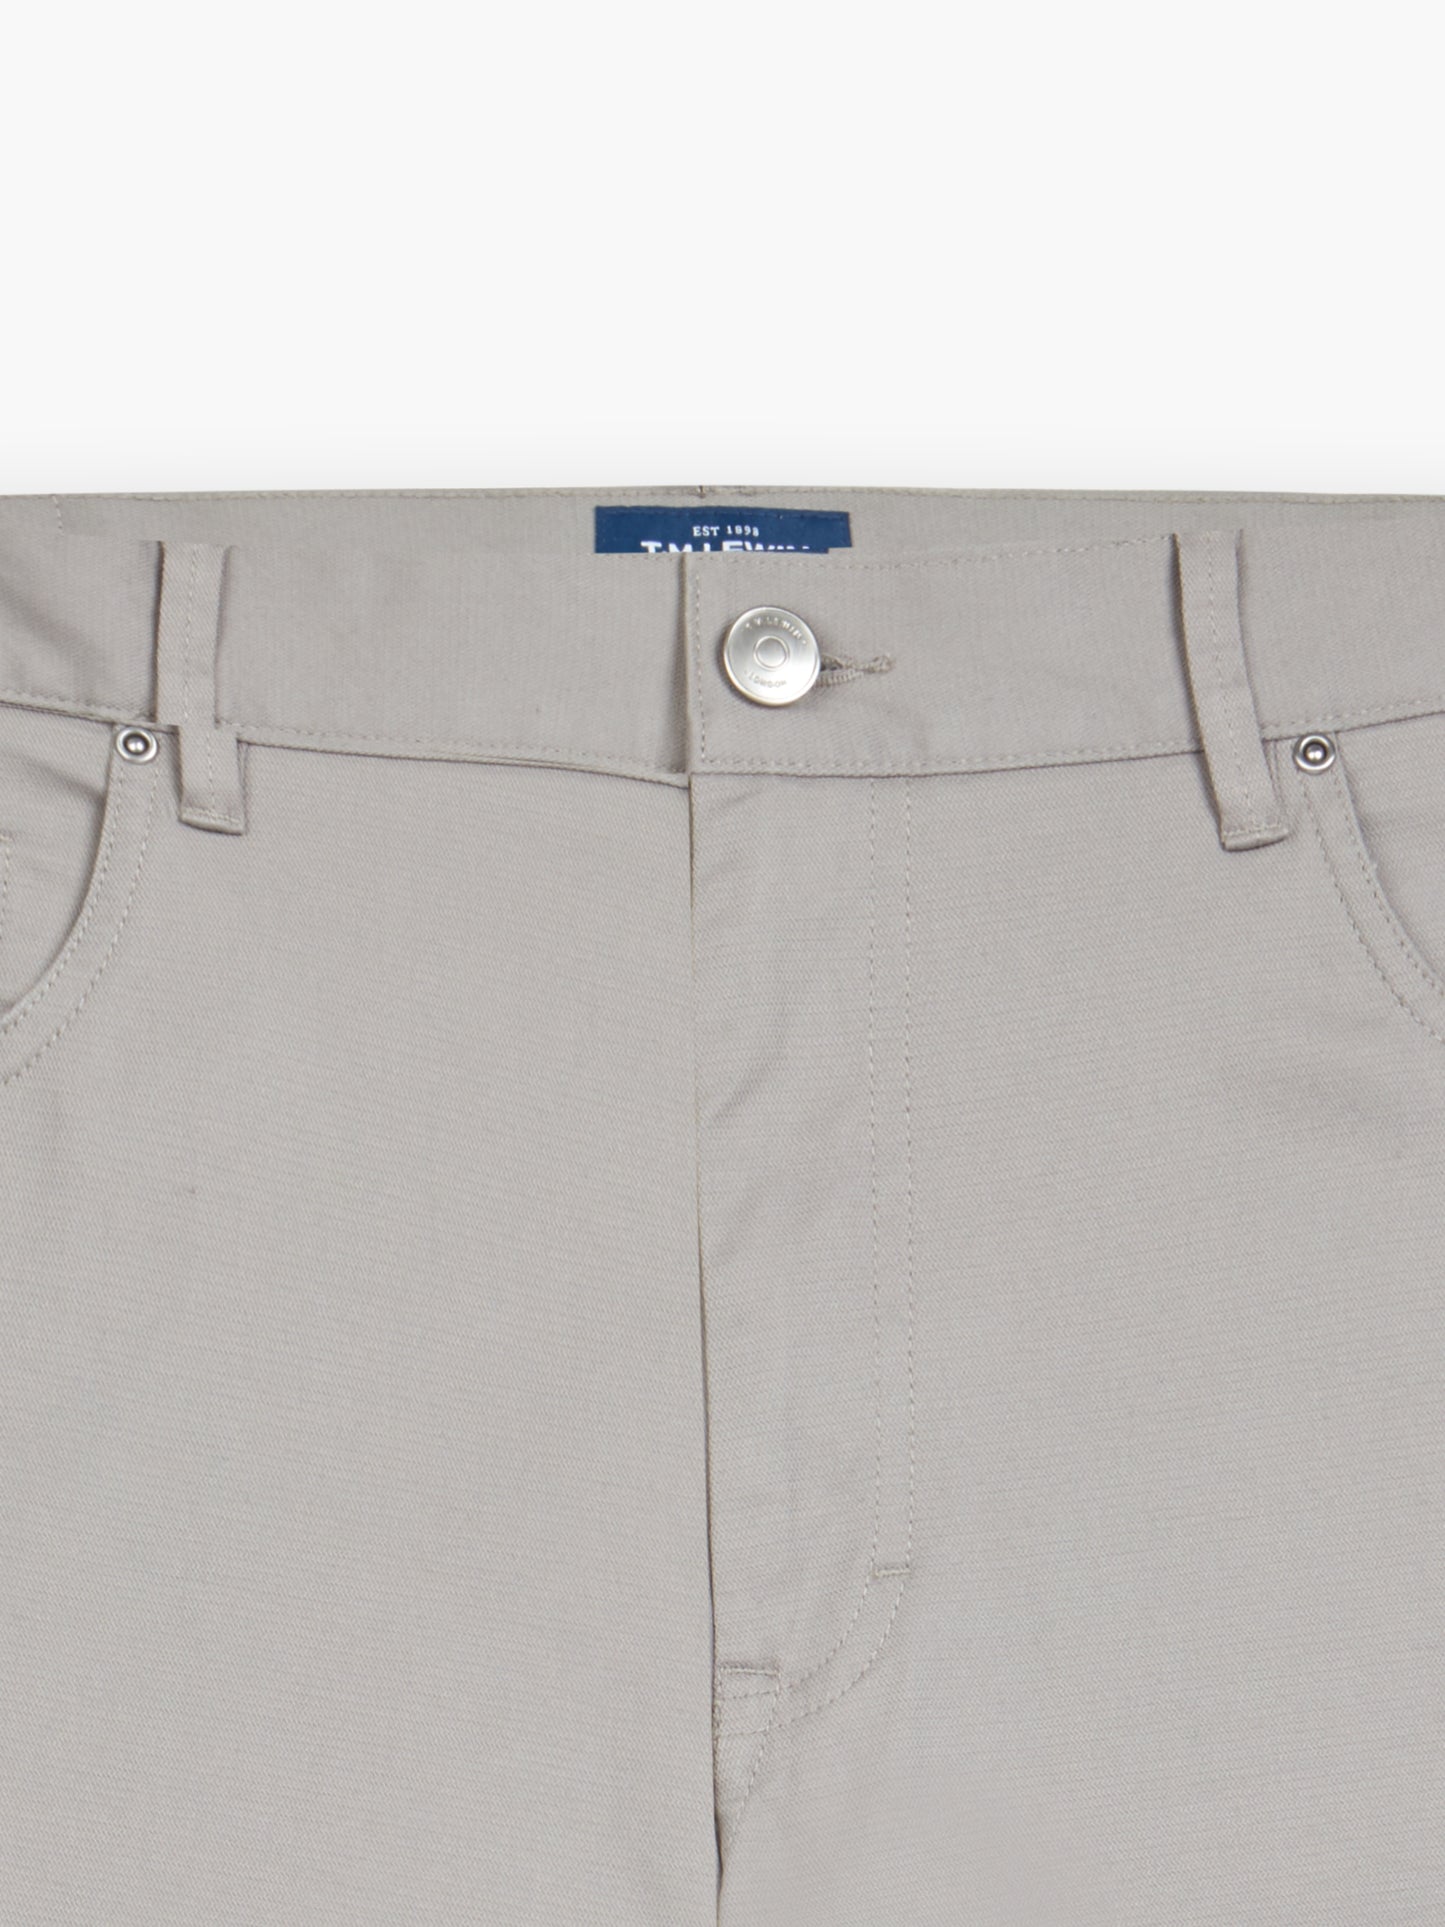 Madden Extra Slim Fit Stone 5-Pocket Trouser